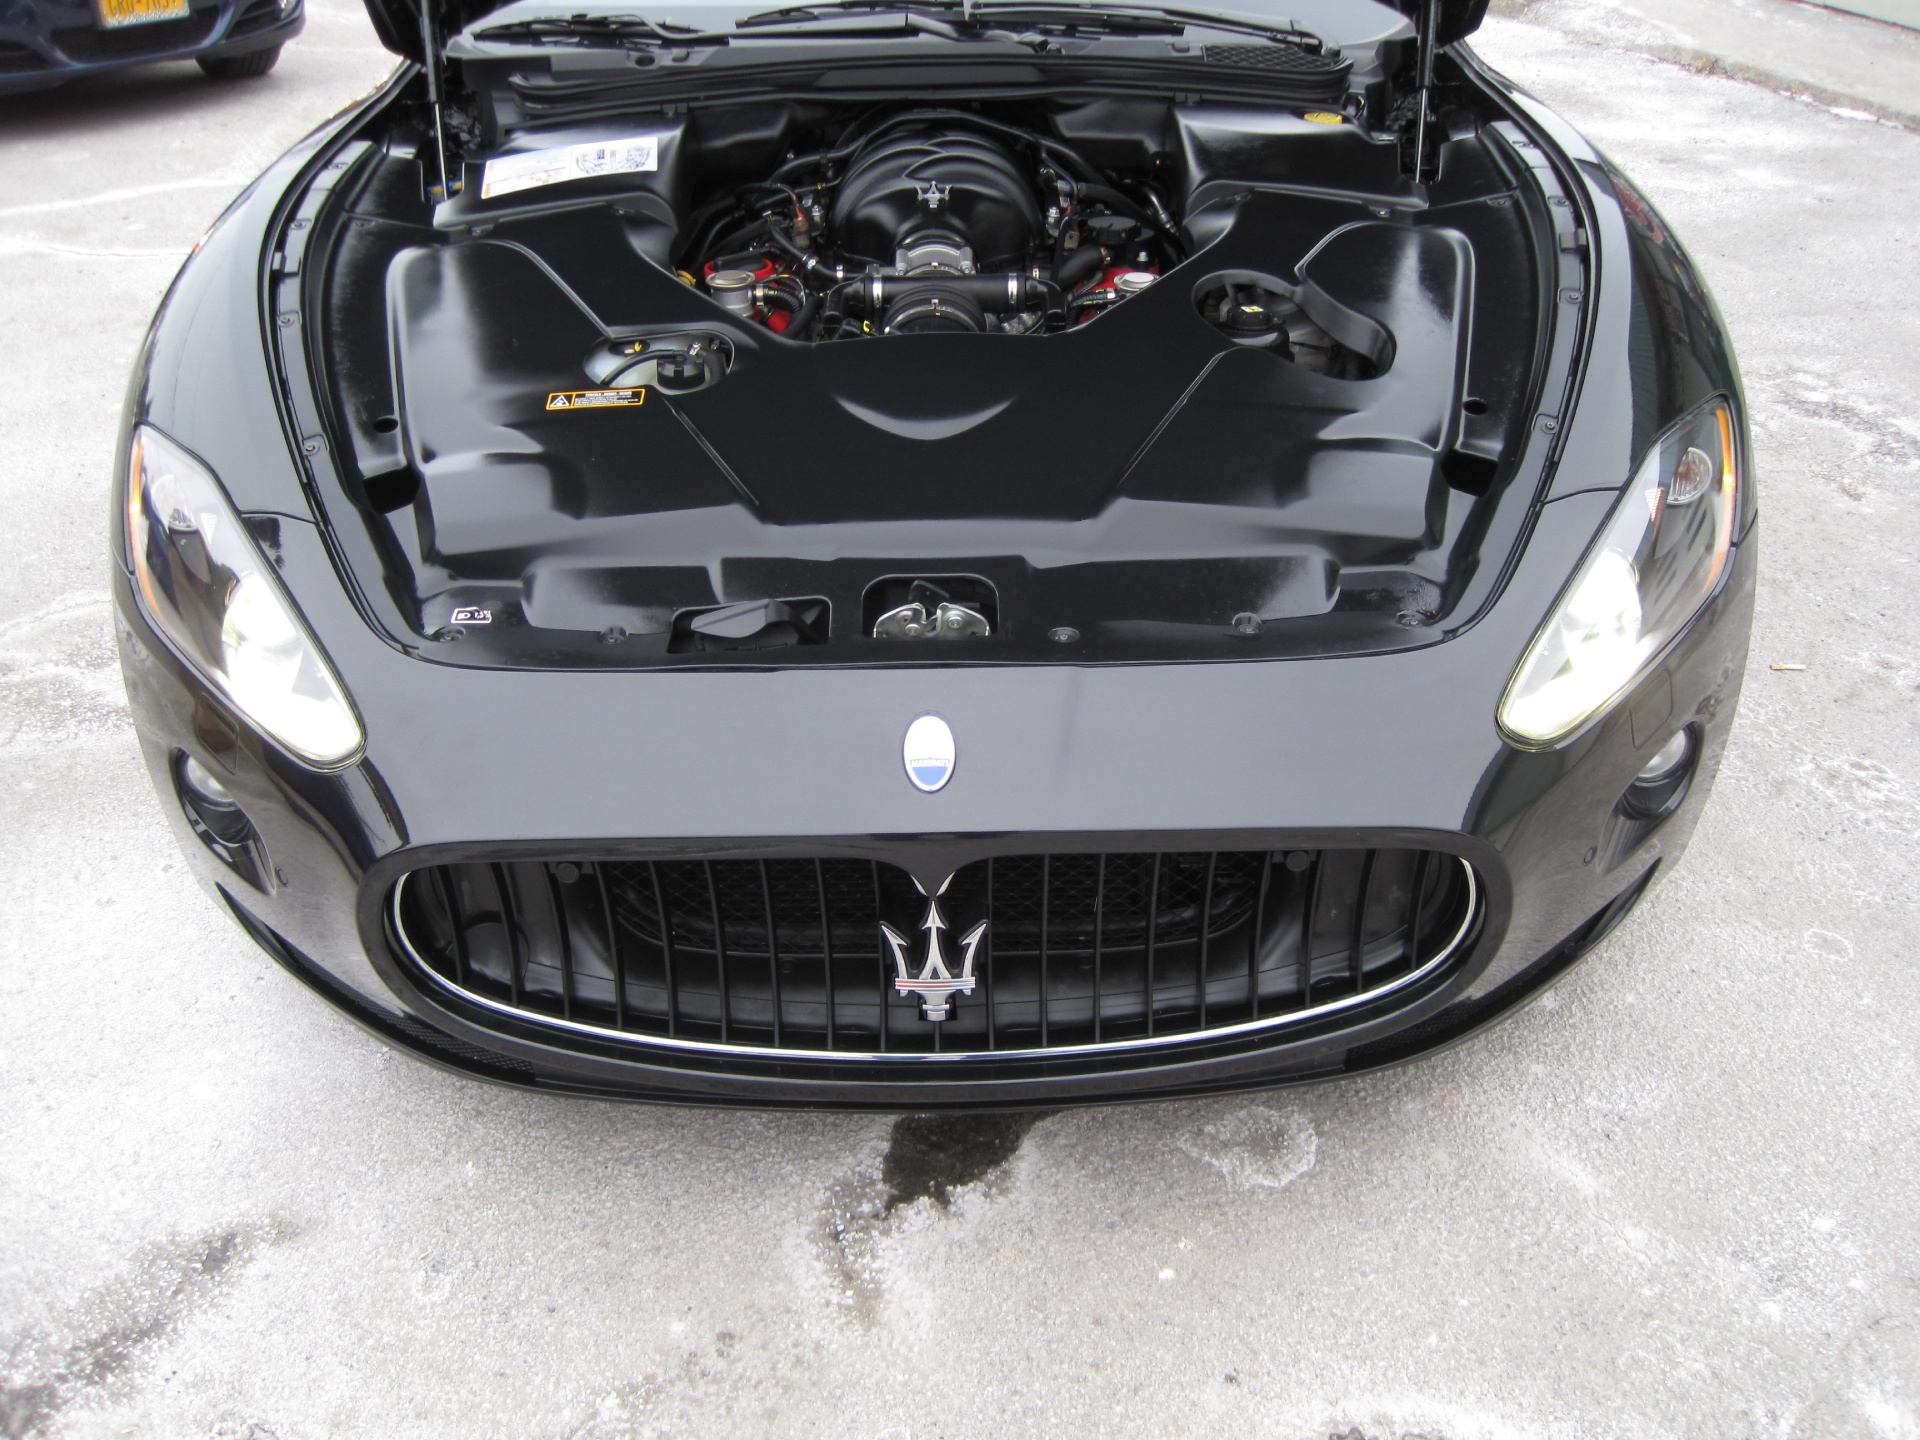 Двигатель мазерати. Maserati GRANTURISMO двигатель. Мазерати Гран Туризмо двигатель. Мазерати 2010 мотор. Мазерати 4.2 мотор 2009.